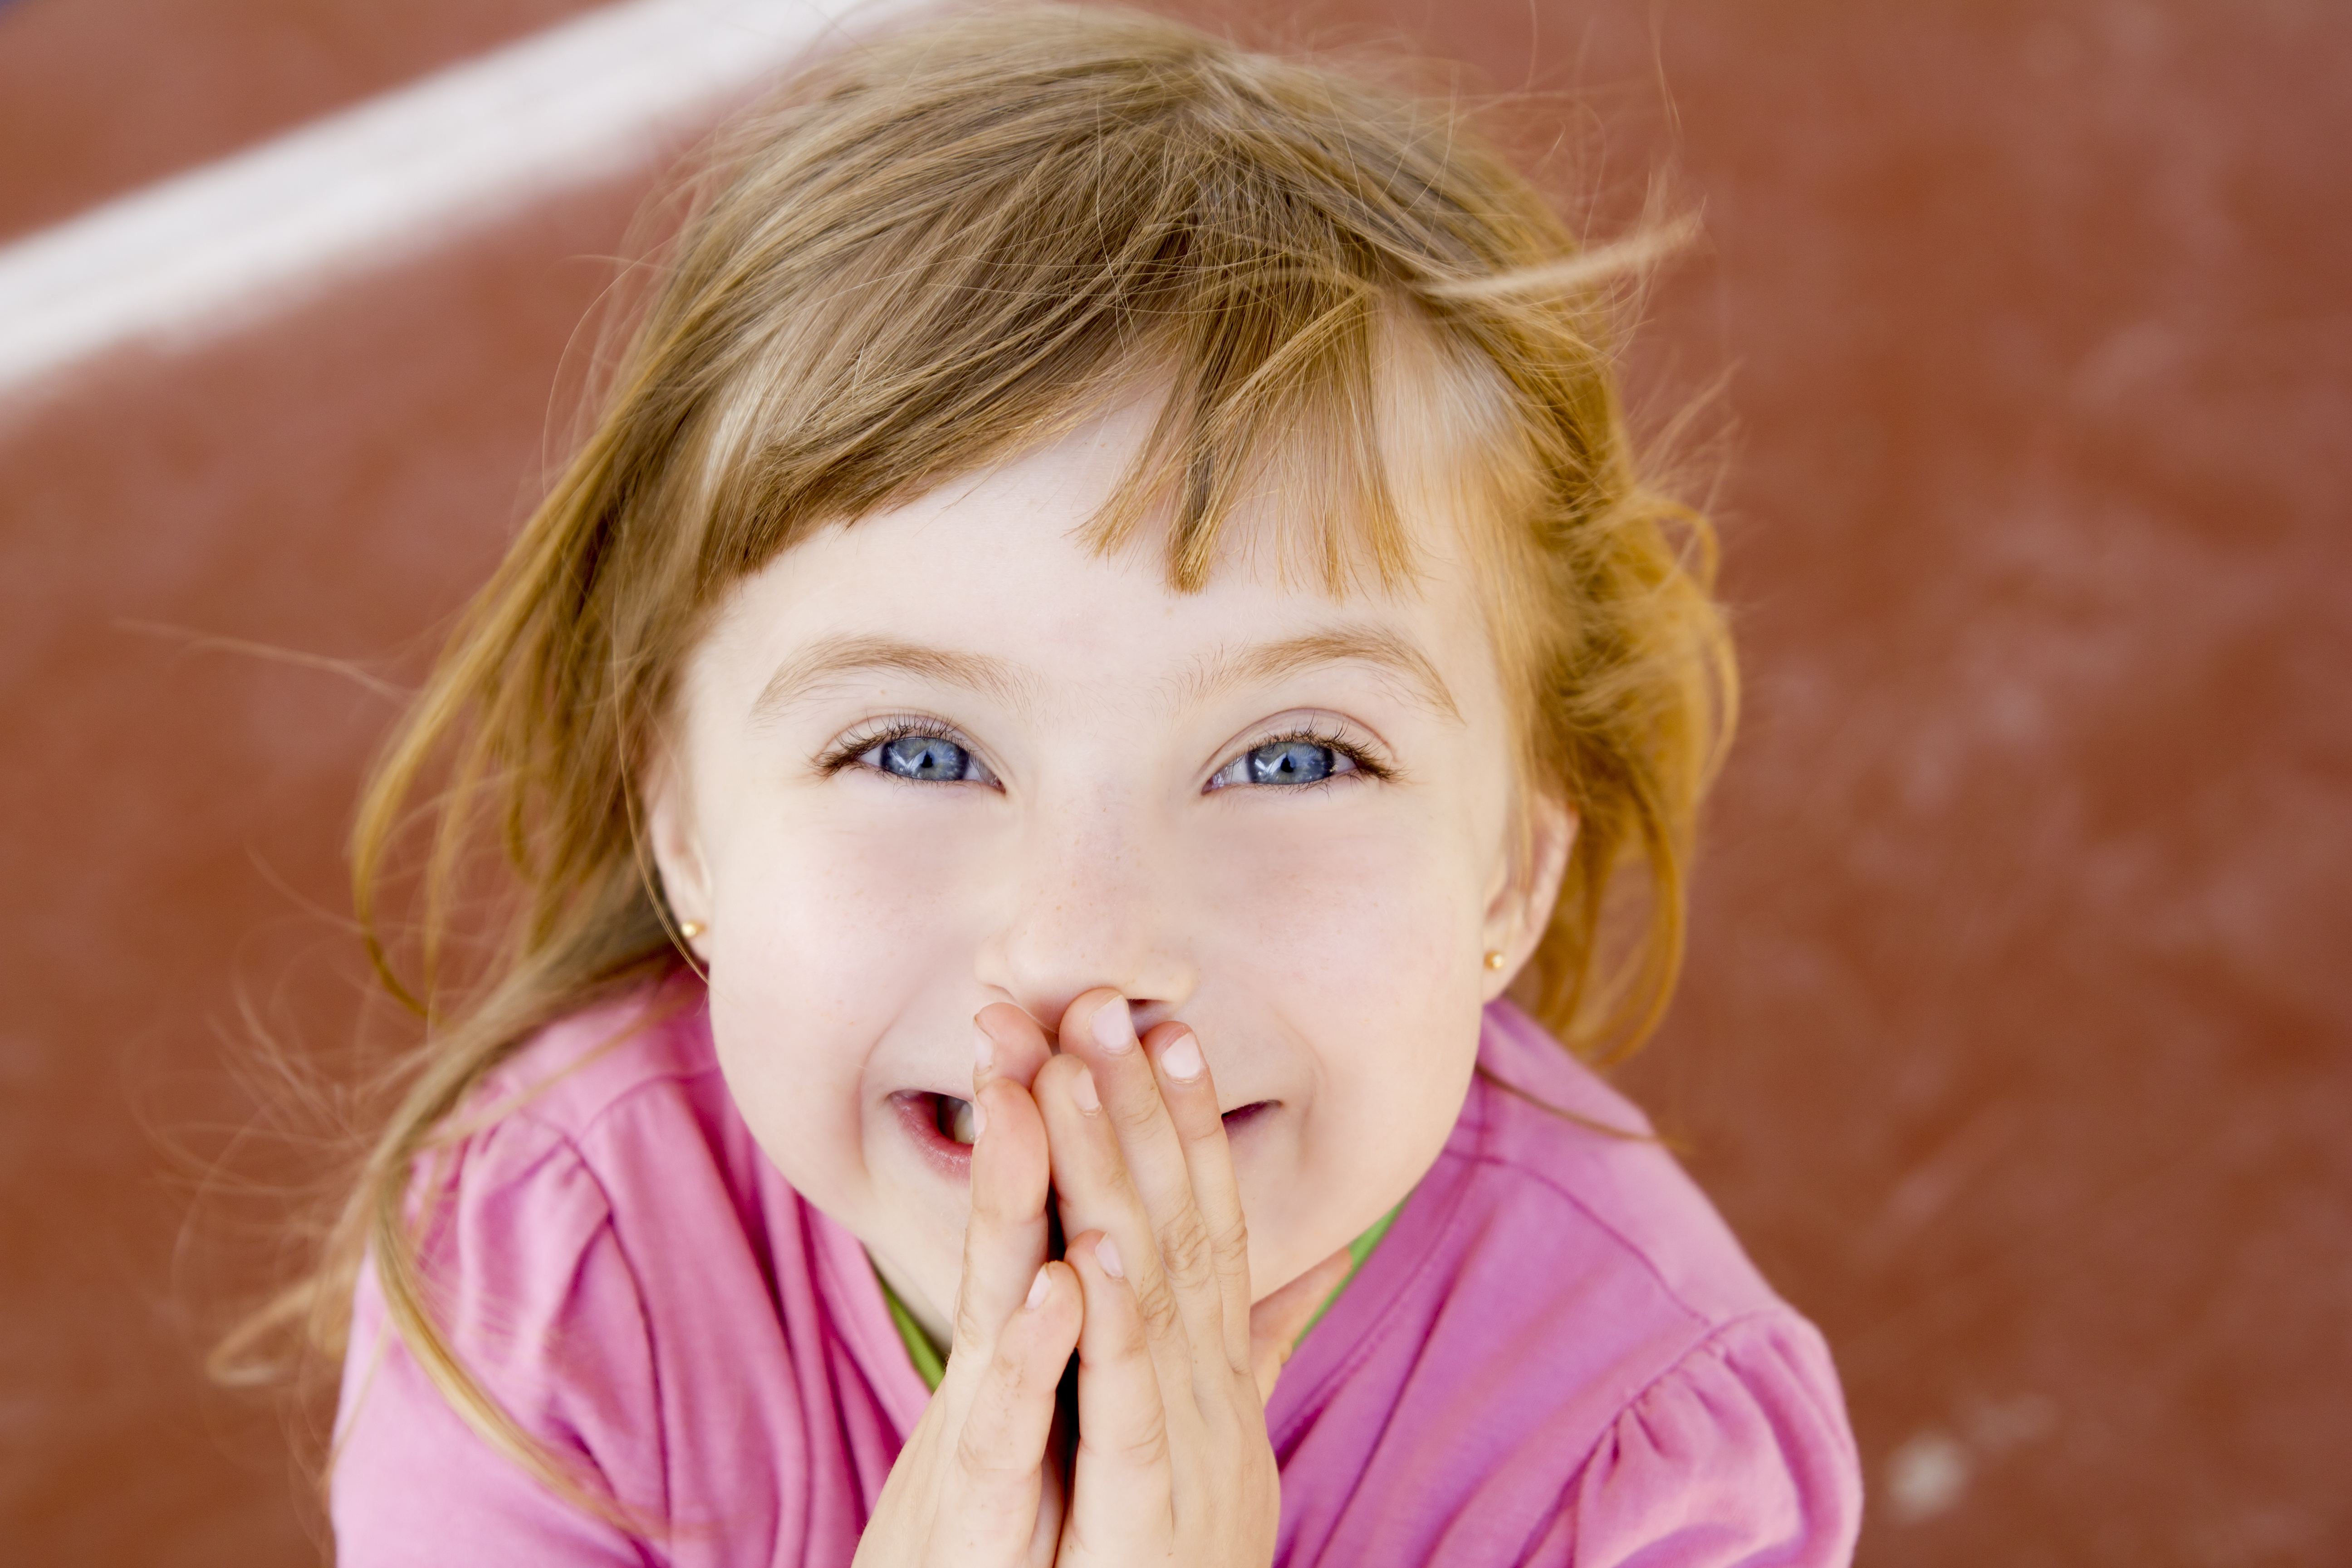 Blonde heureuse souriante petite fille excitée rire | Source : Getty Images